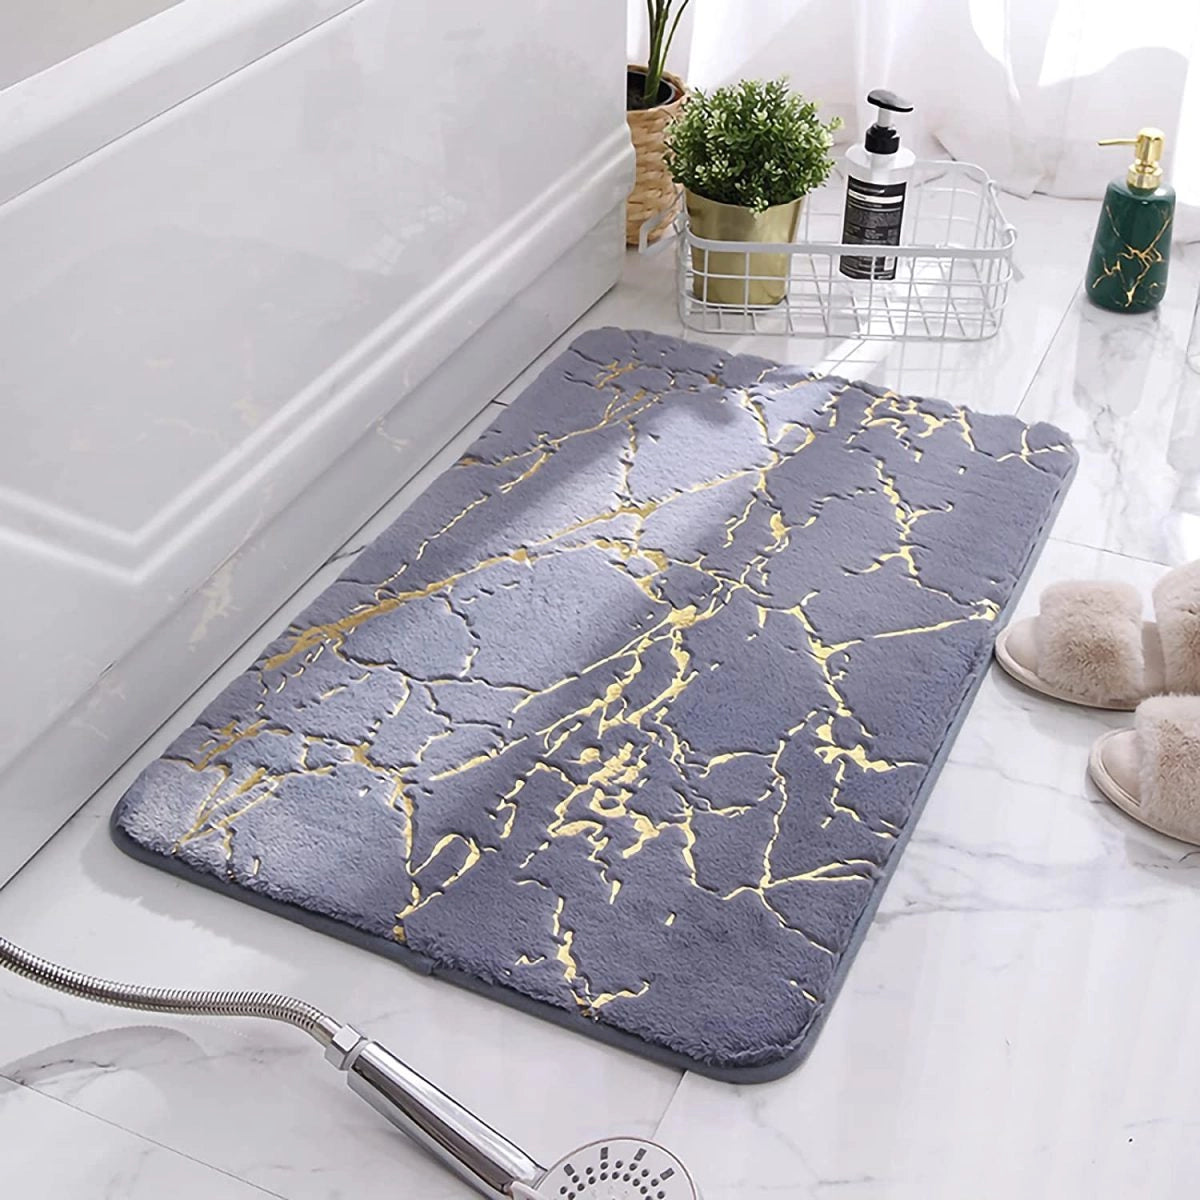 Marble bath mats